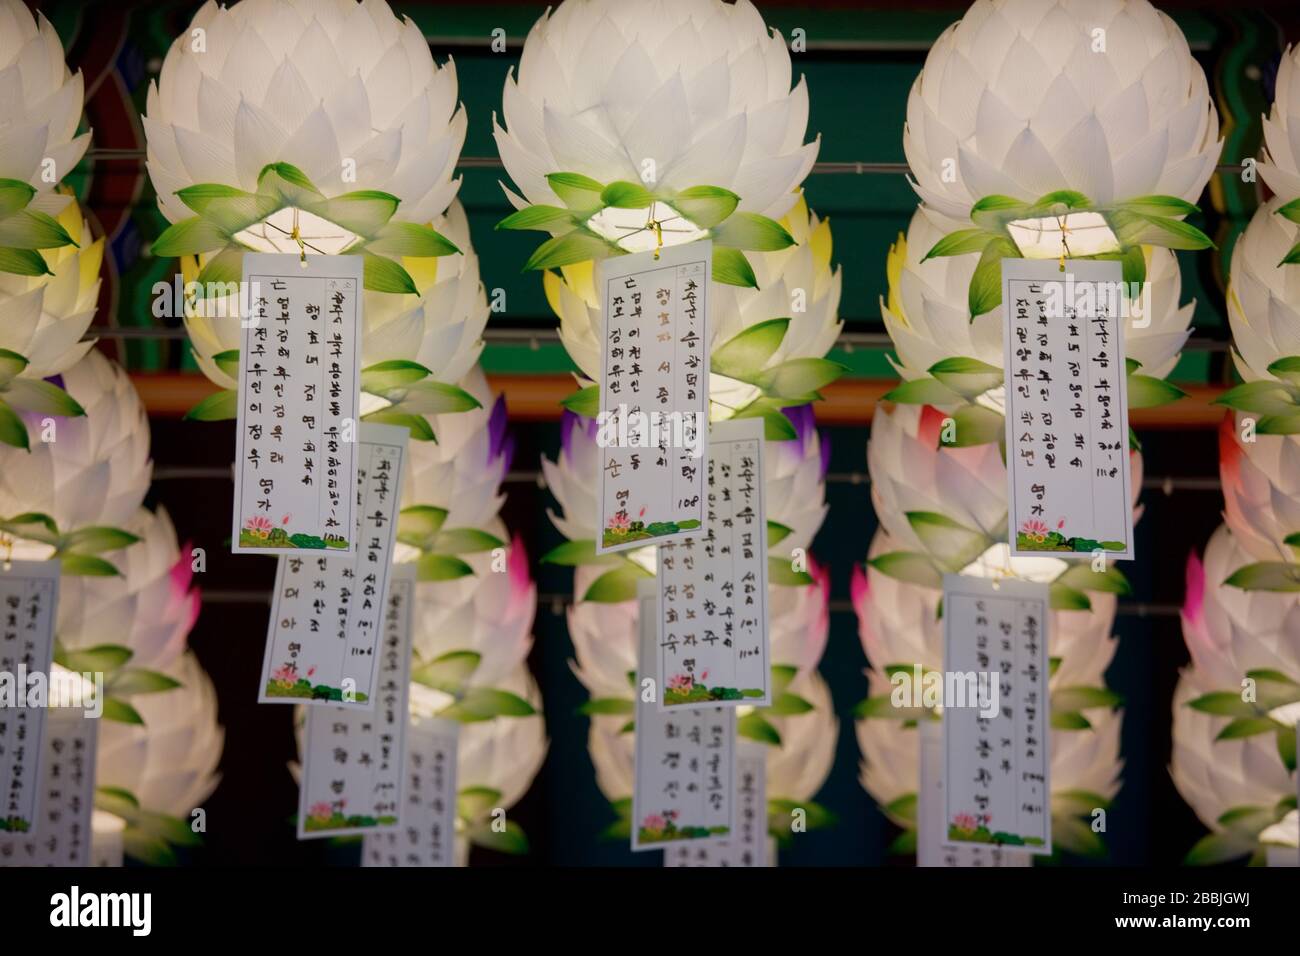 Stock Photo of Lanterns in honour of Buddha's birthday at temple, Seou Stock Photo